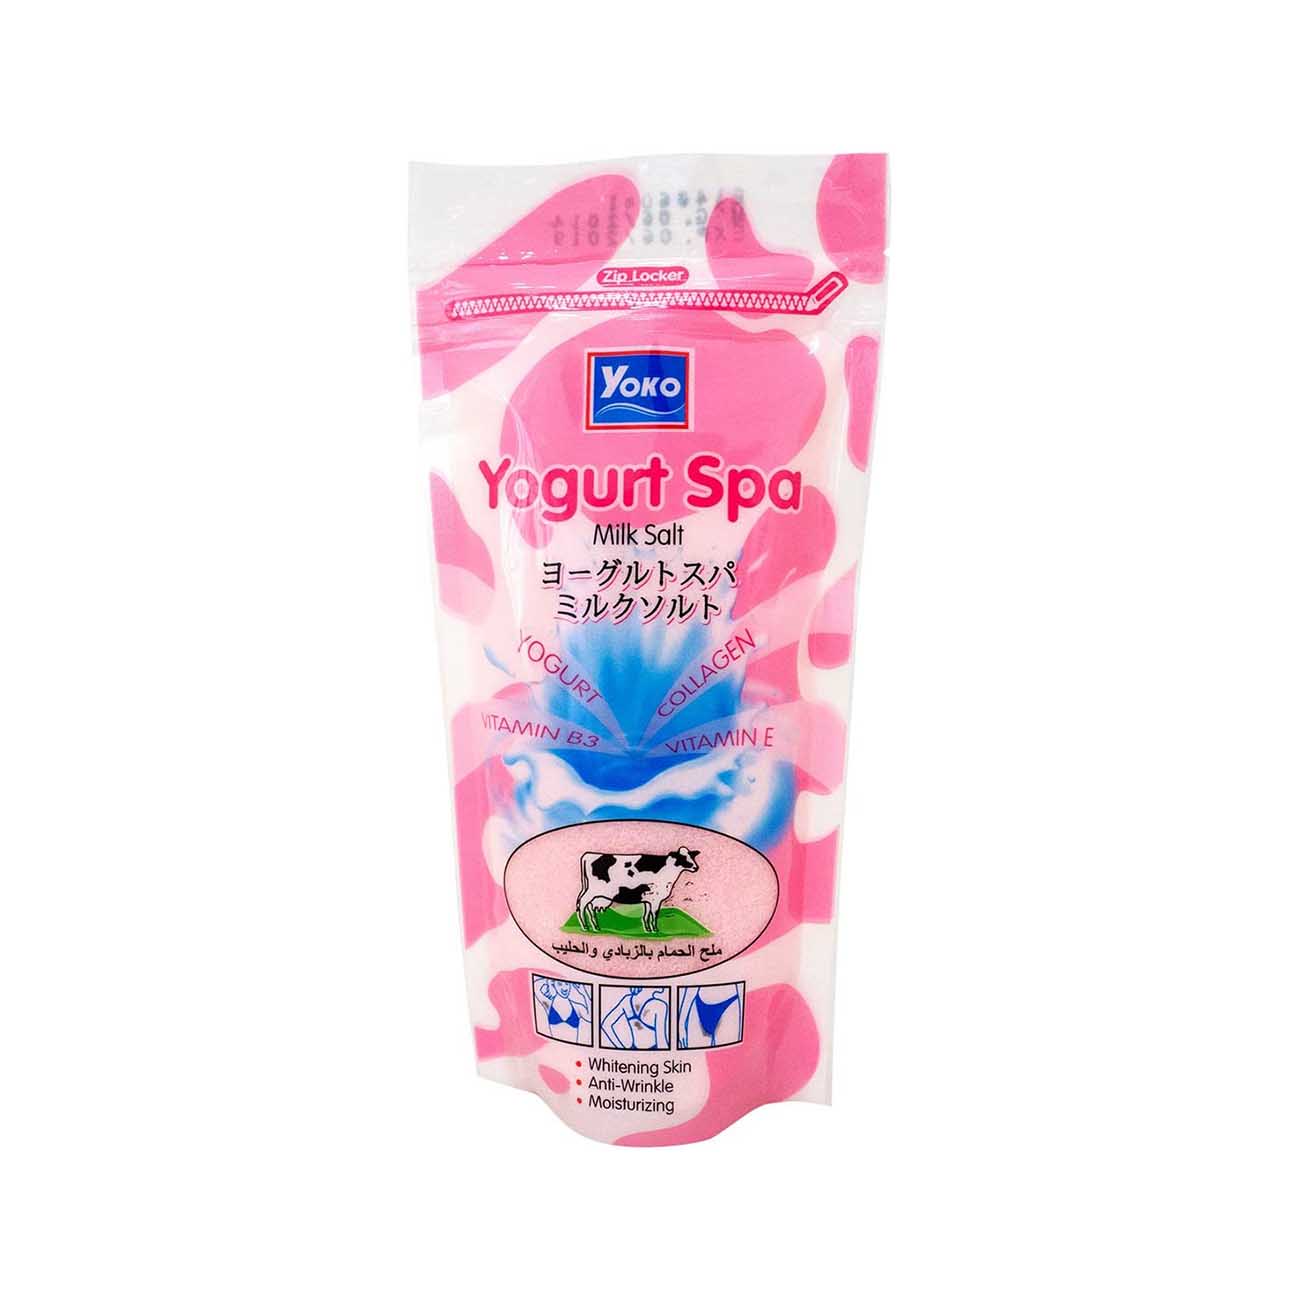 Yoko Yogurt SPA Milk Salt 300g